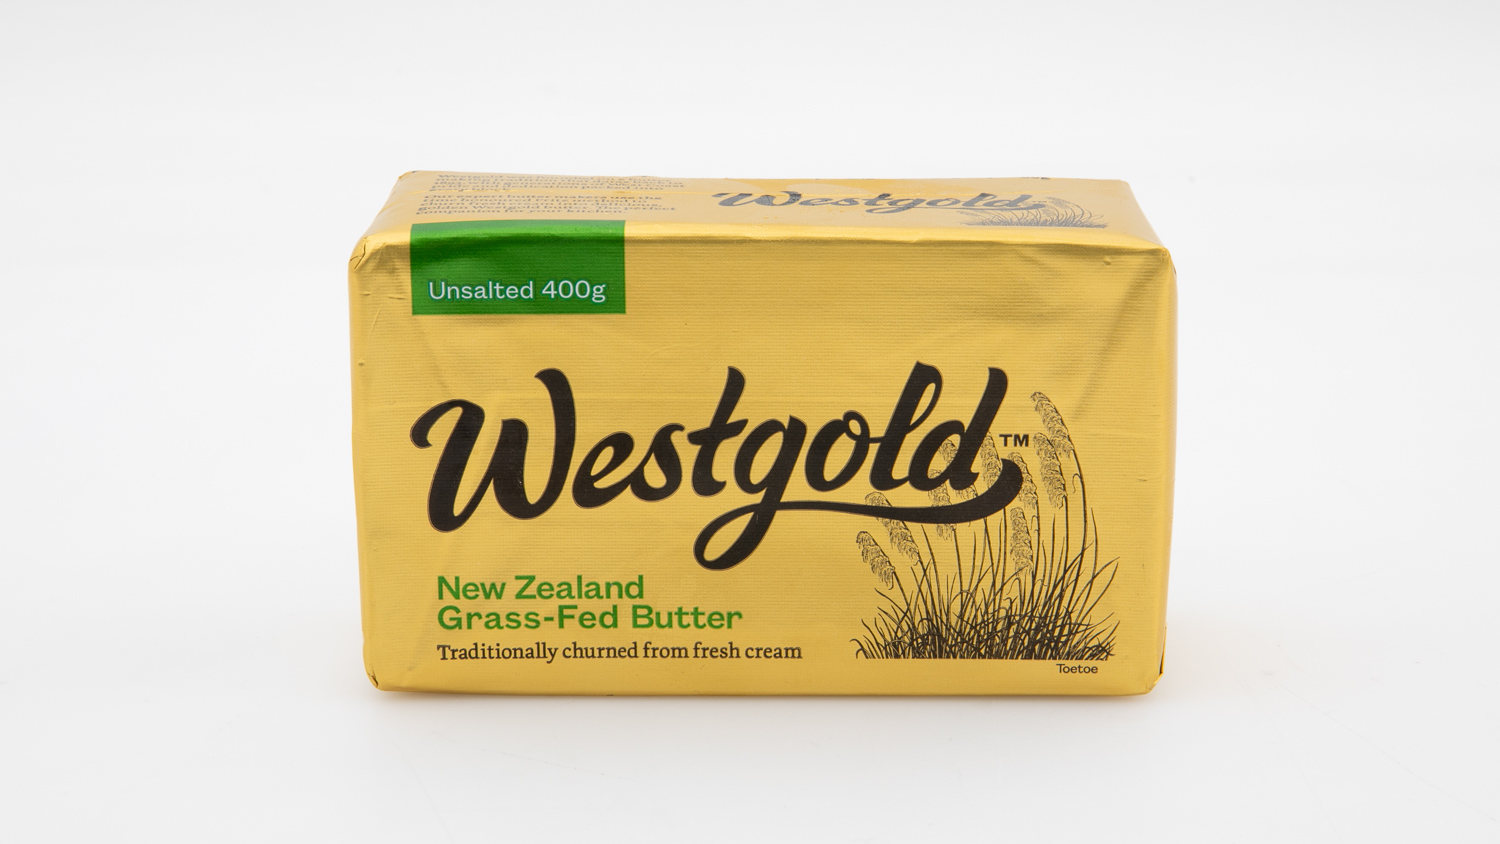 Westgold Unsalted New Zealand Grass-Fed Butter carousel image